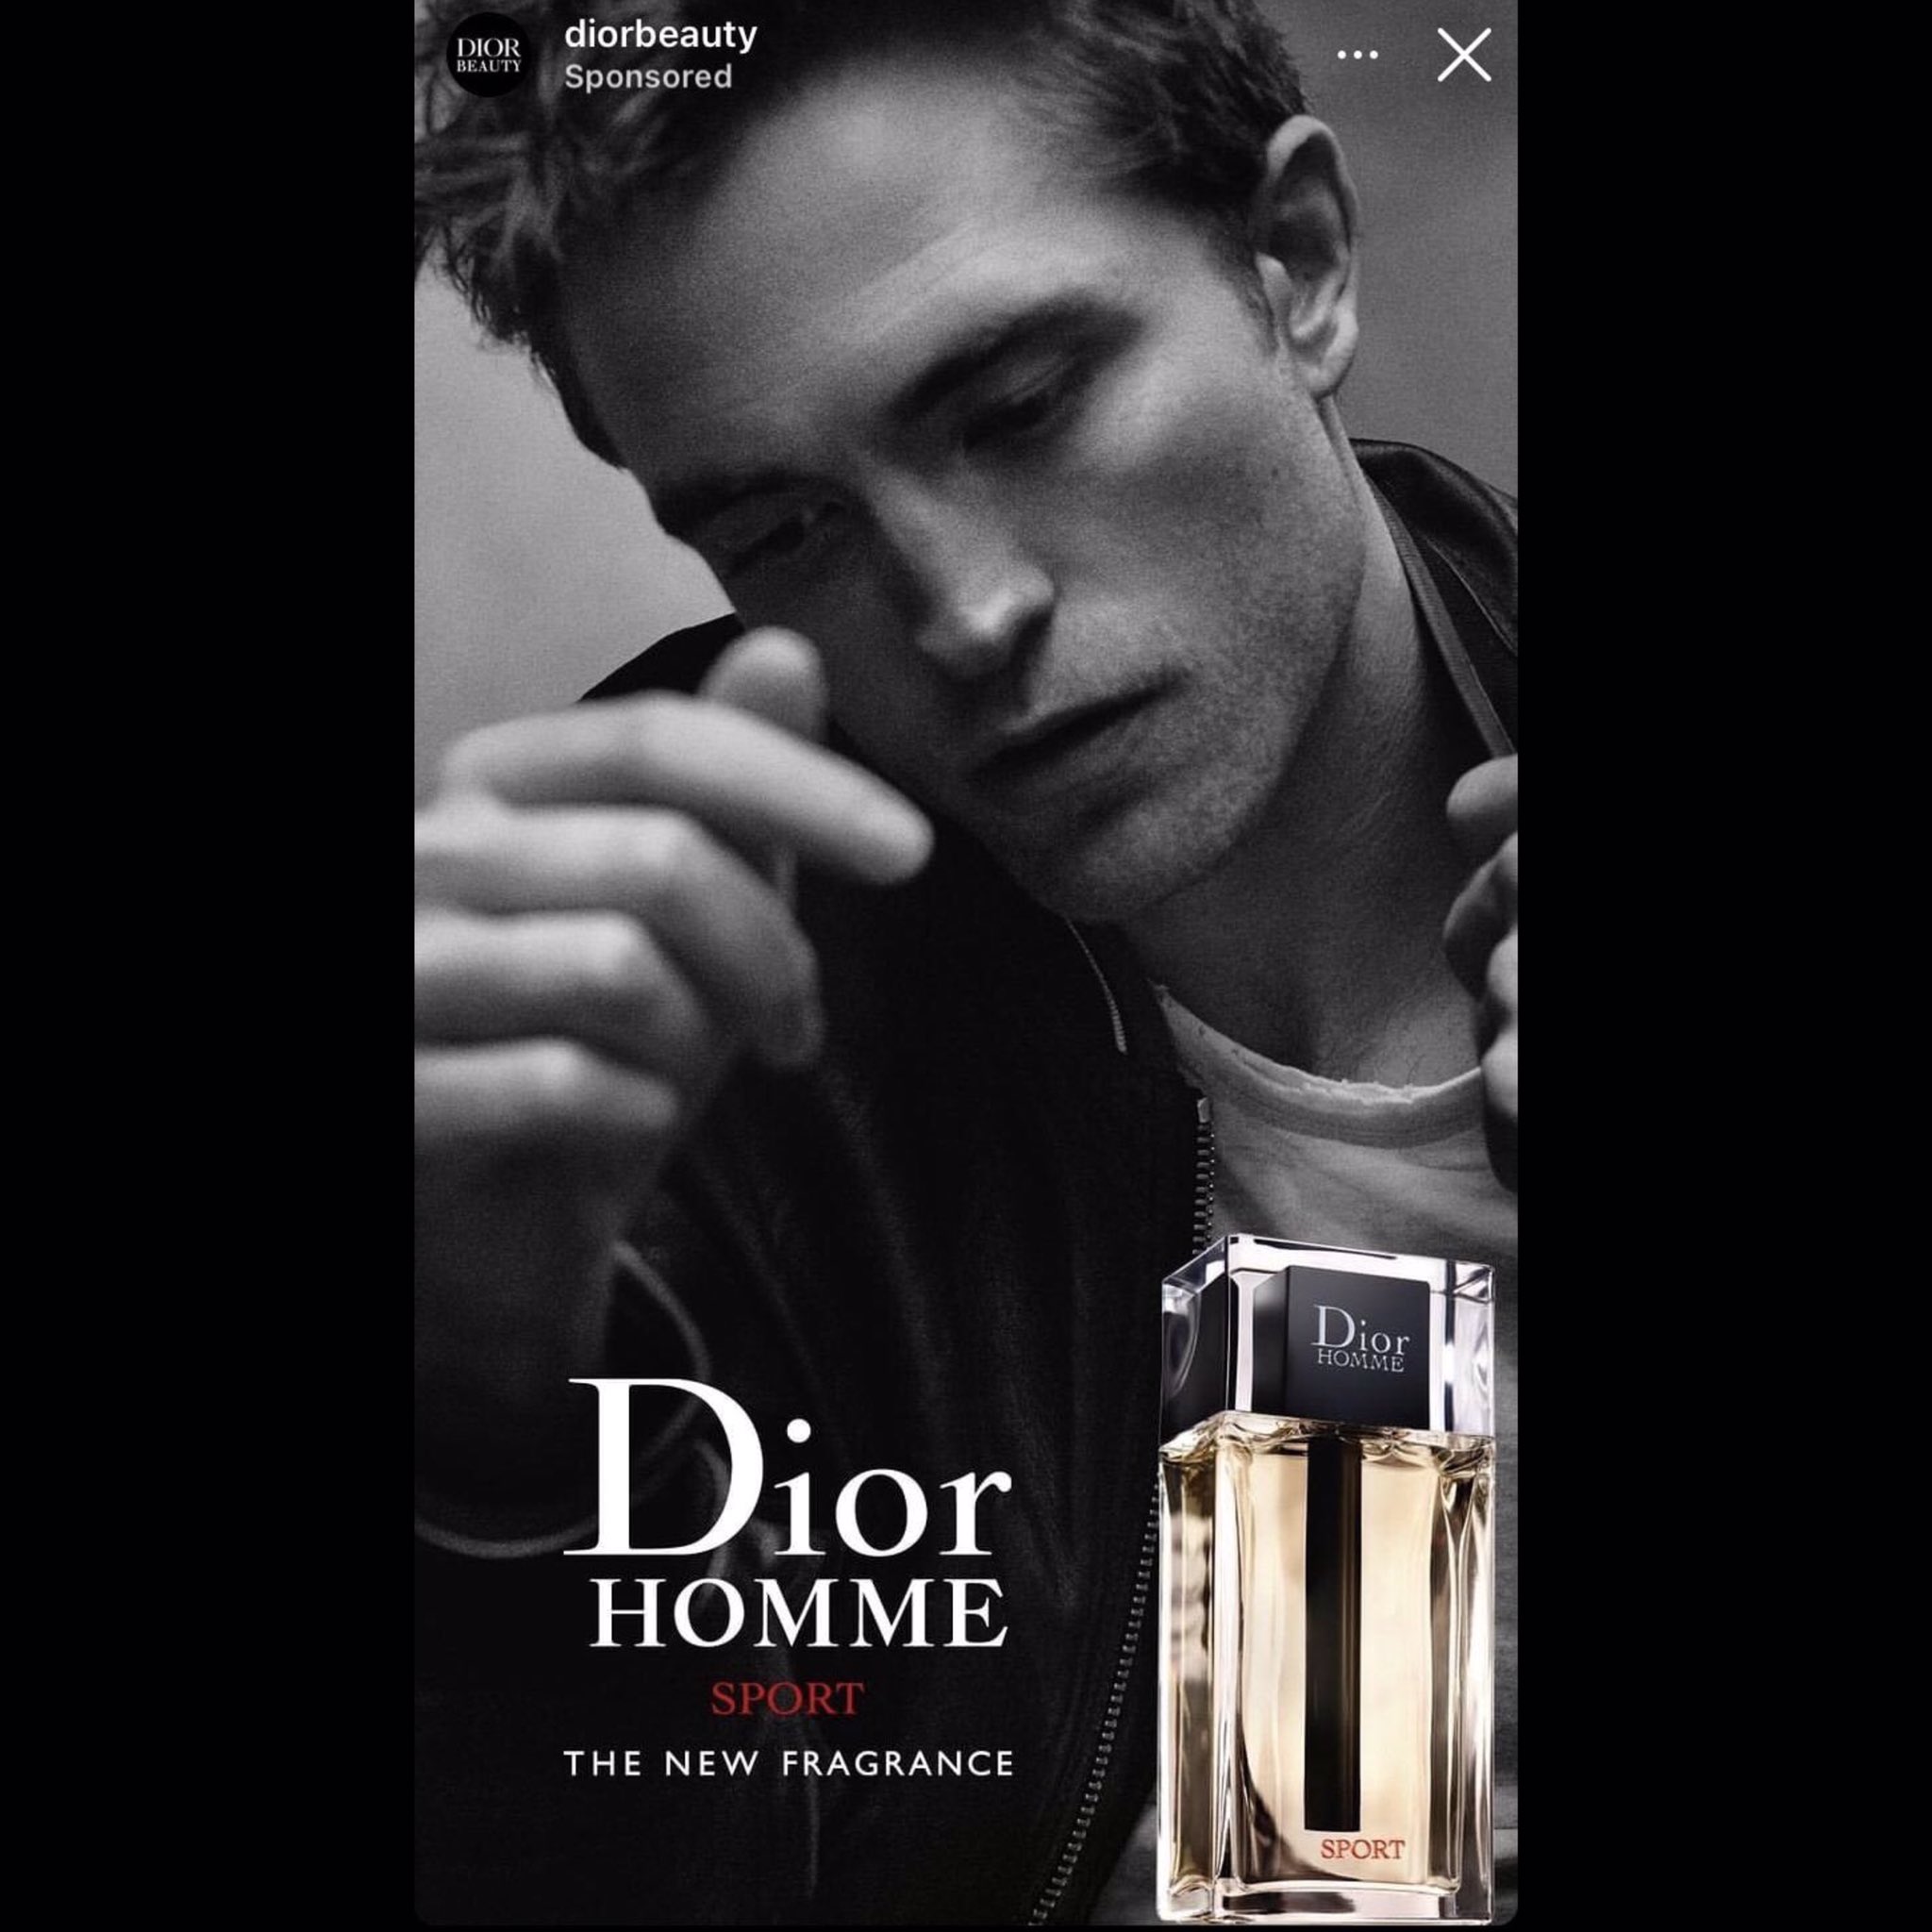 Dior Homme Sport  Dior homme sport, Dior homme, Robert pattinson